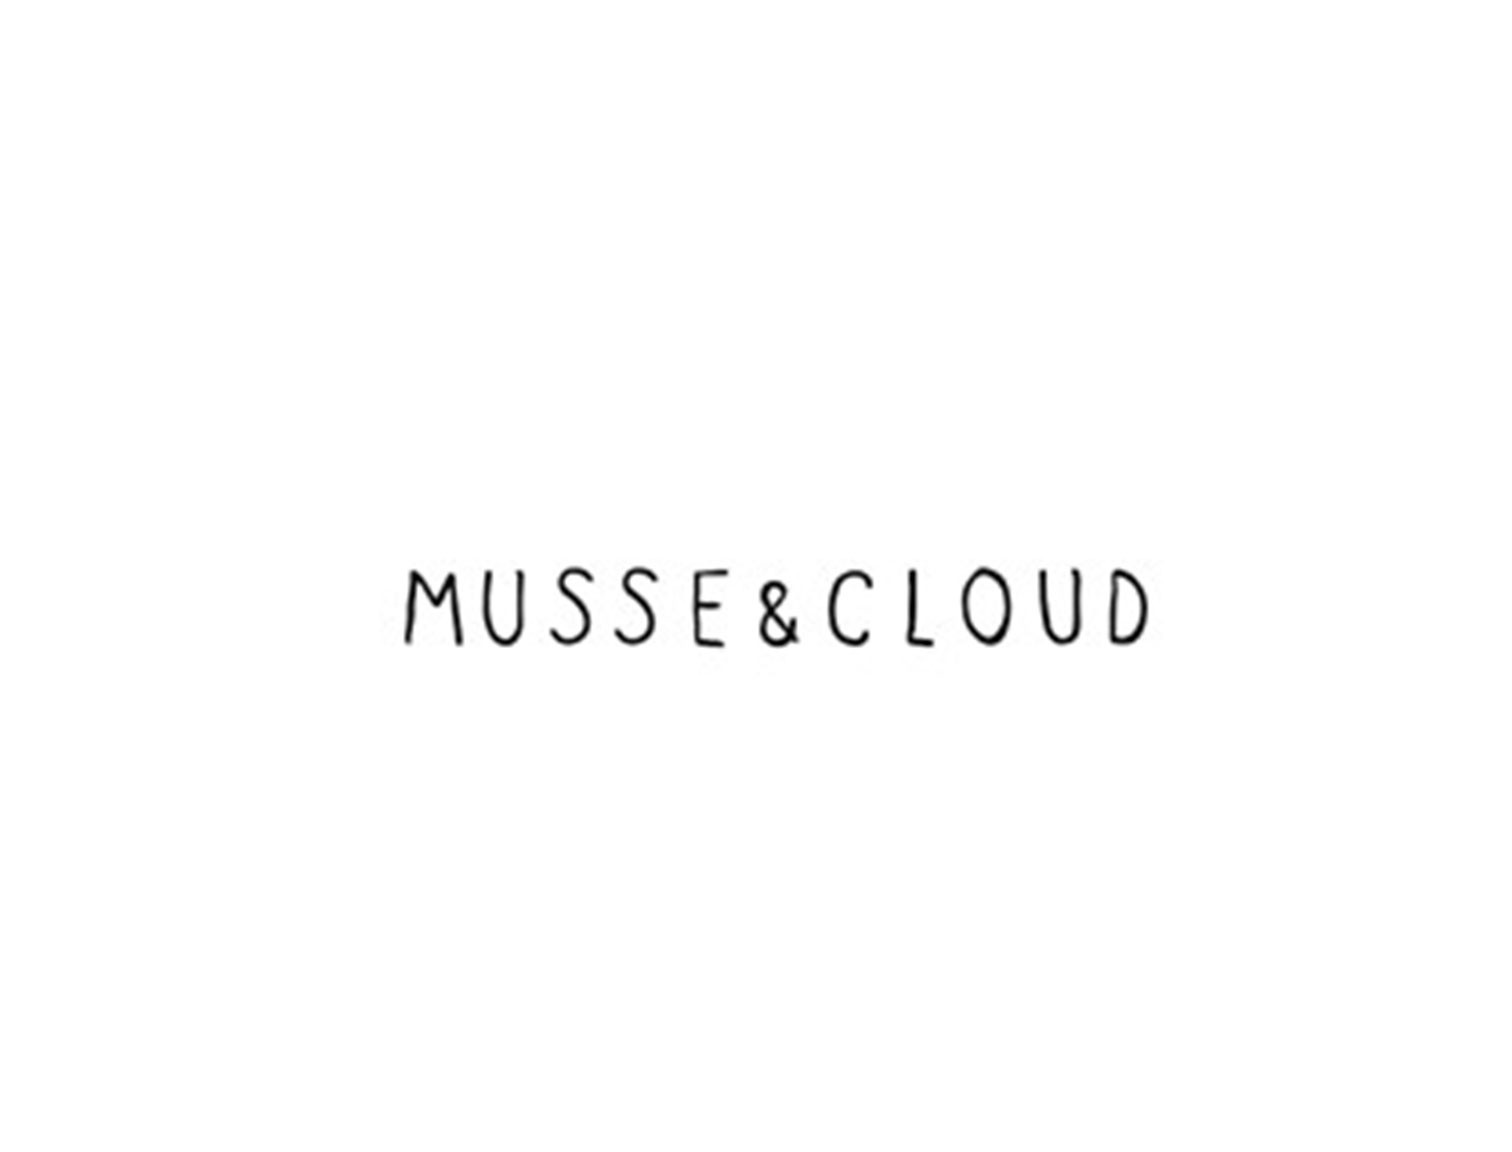 MUSSE & CLOUD